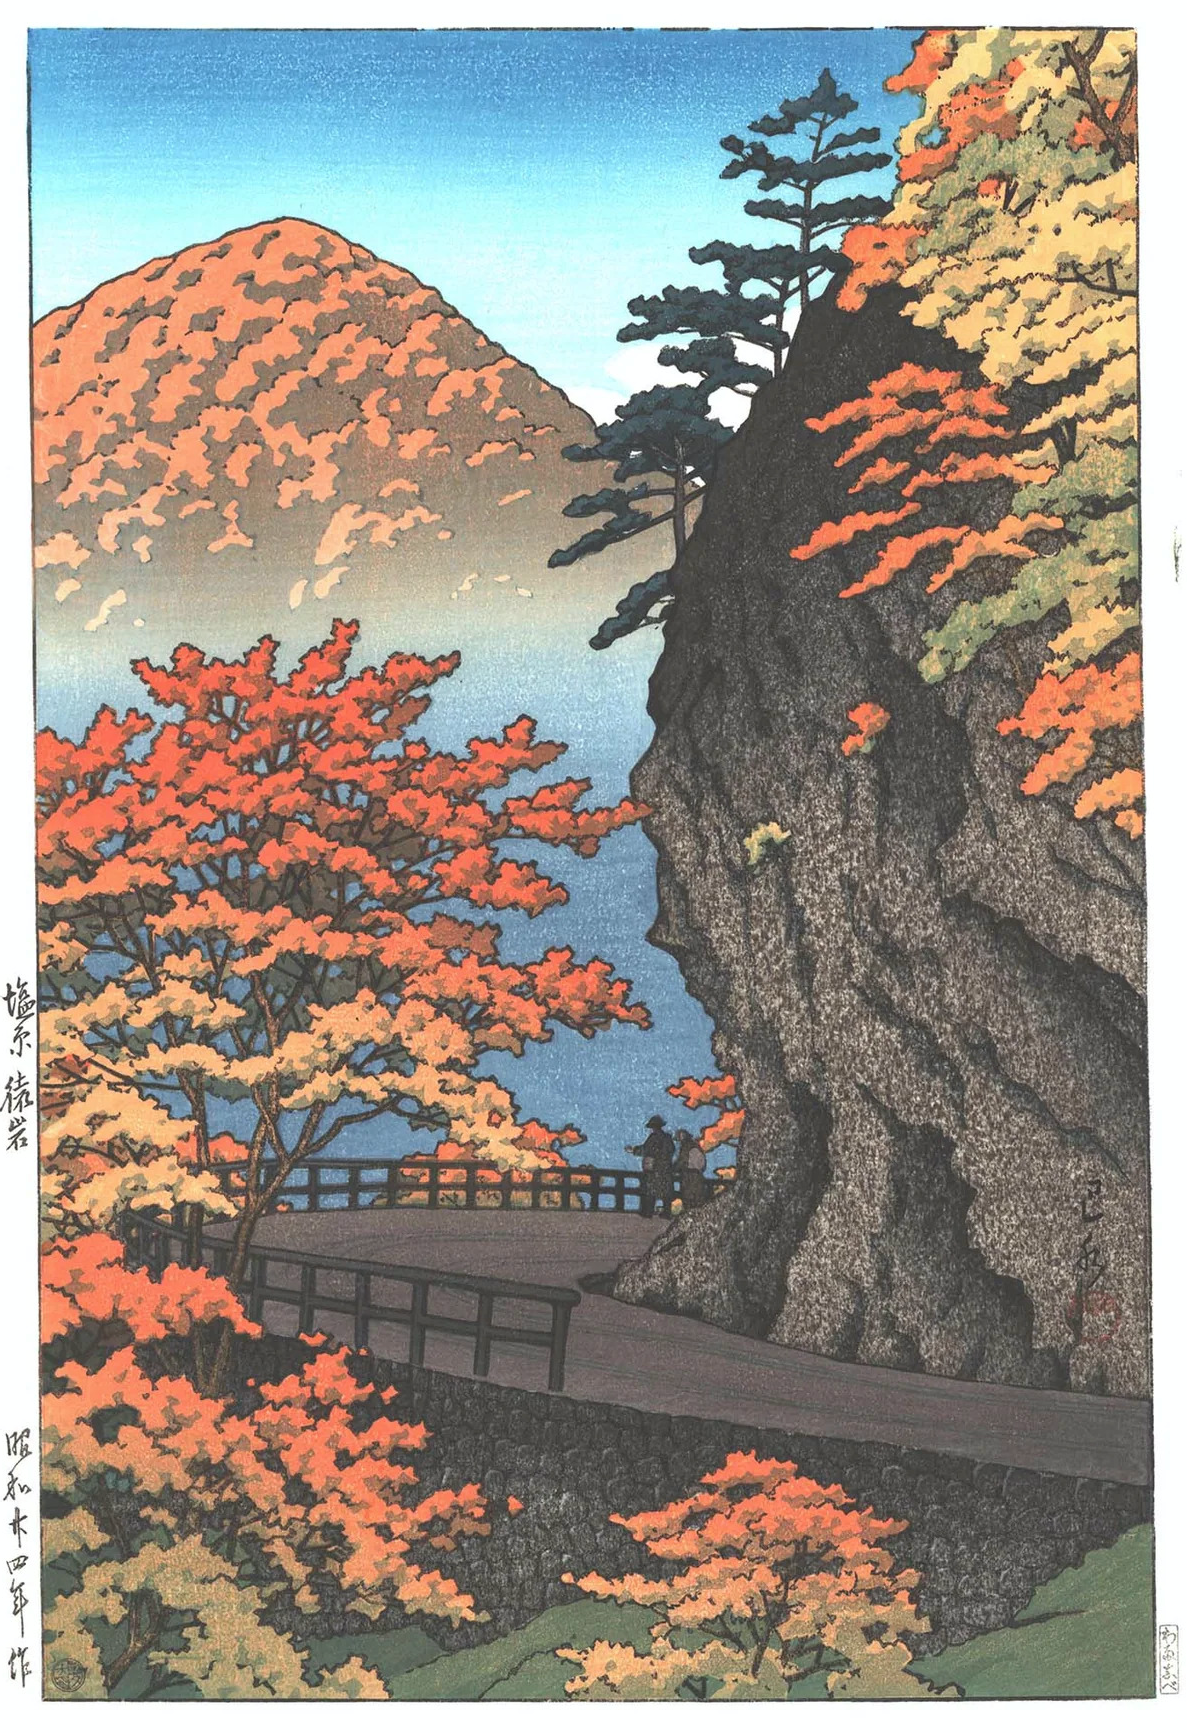 Herbst in Saruiwa, Shiobara by Hasui Kawase - 1949 - 38 x 24,4 cm Private Sammlung